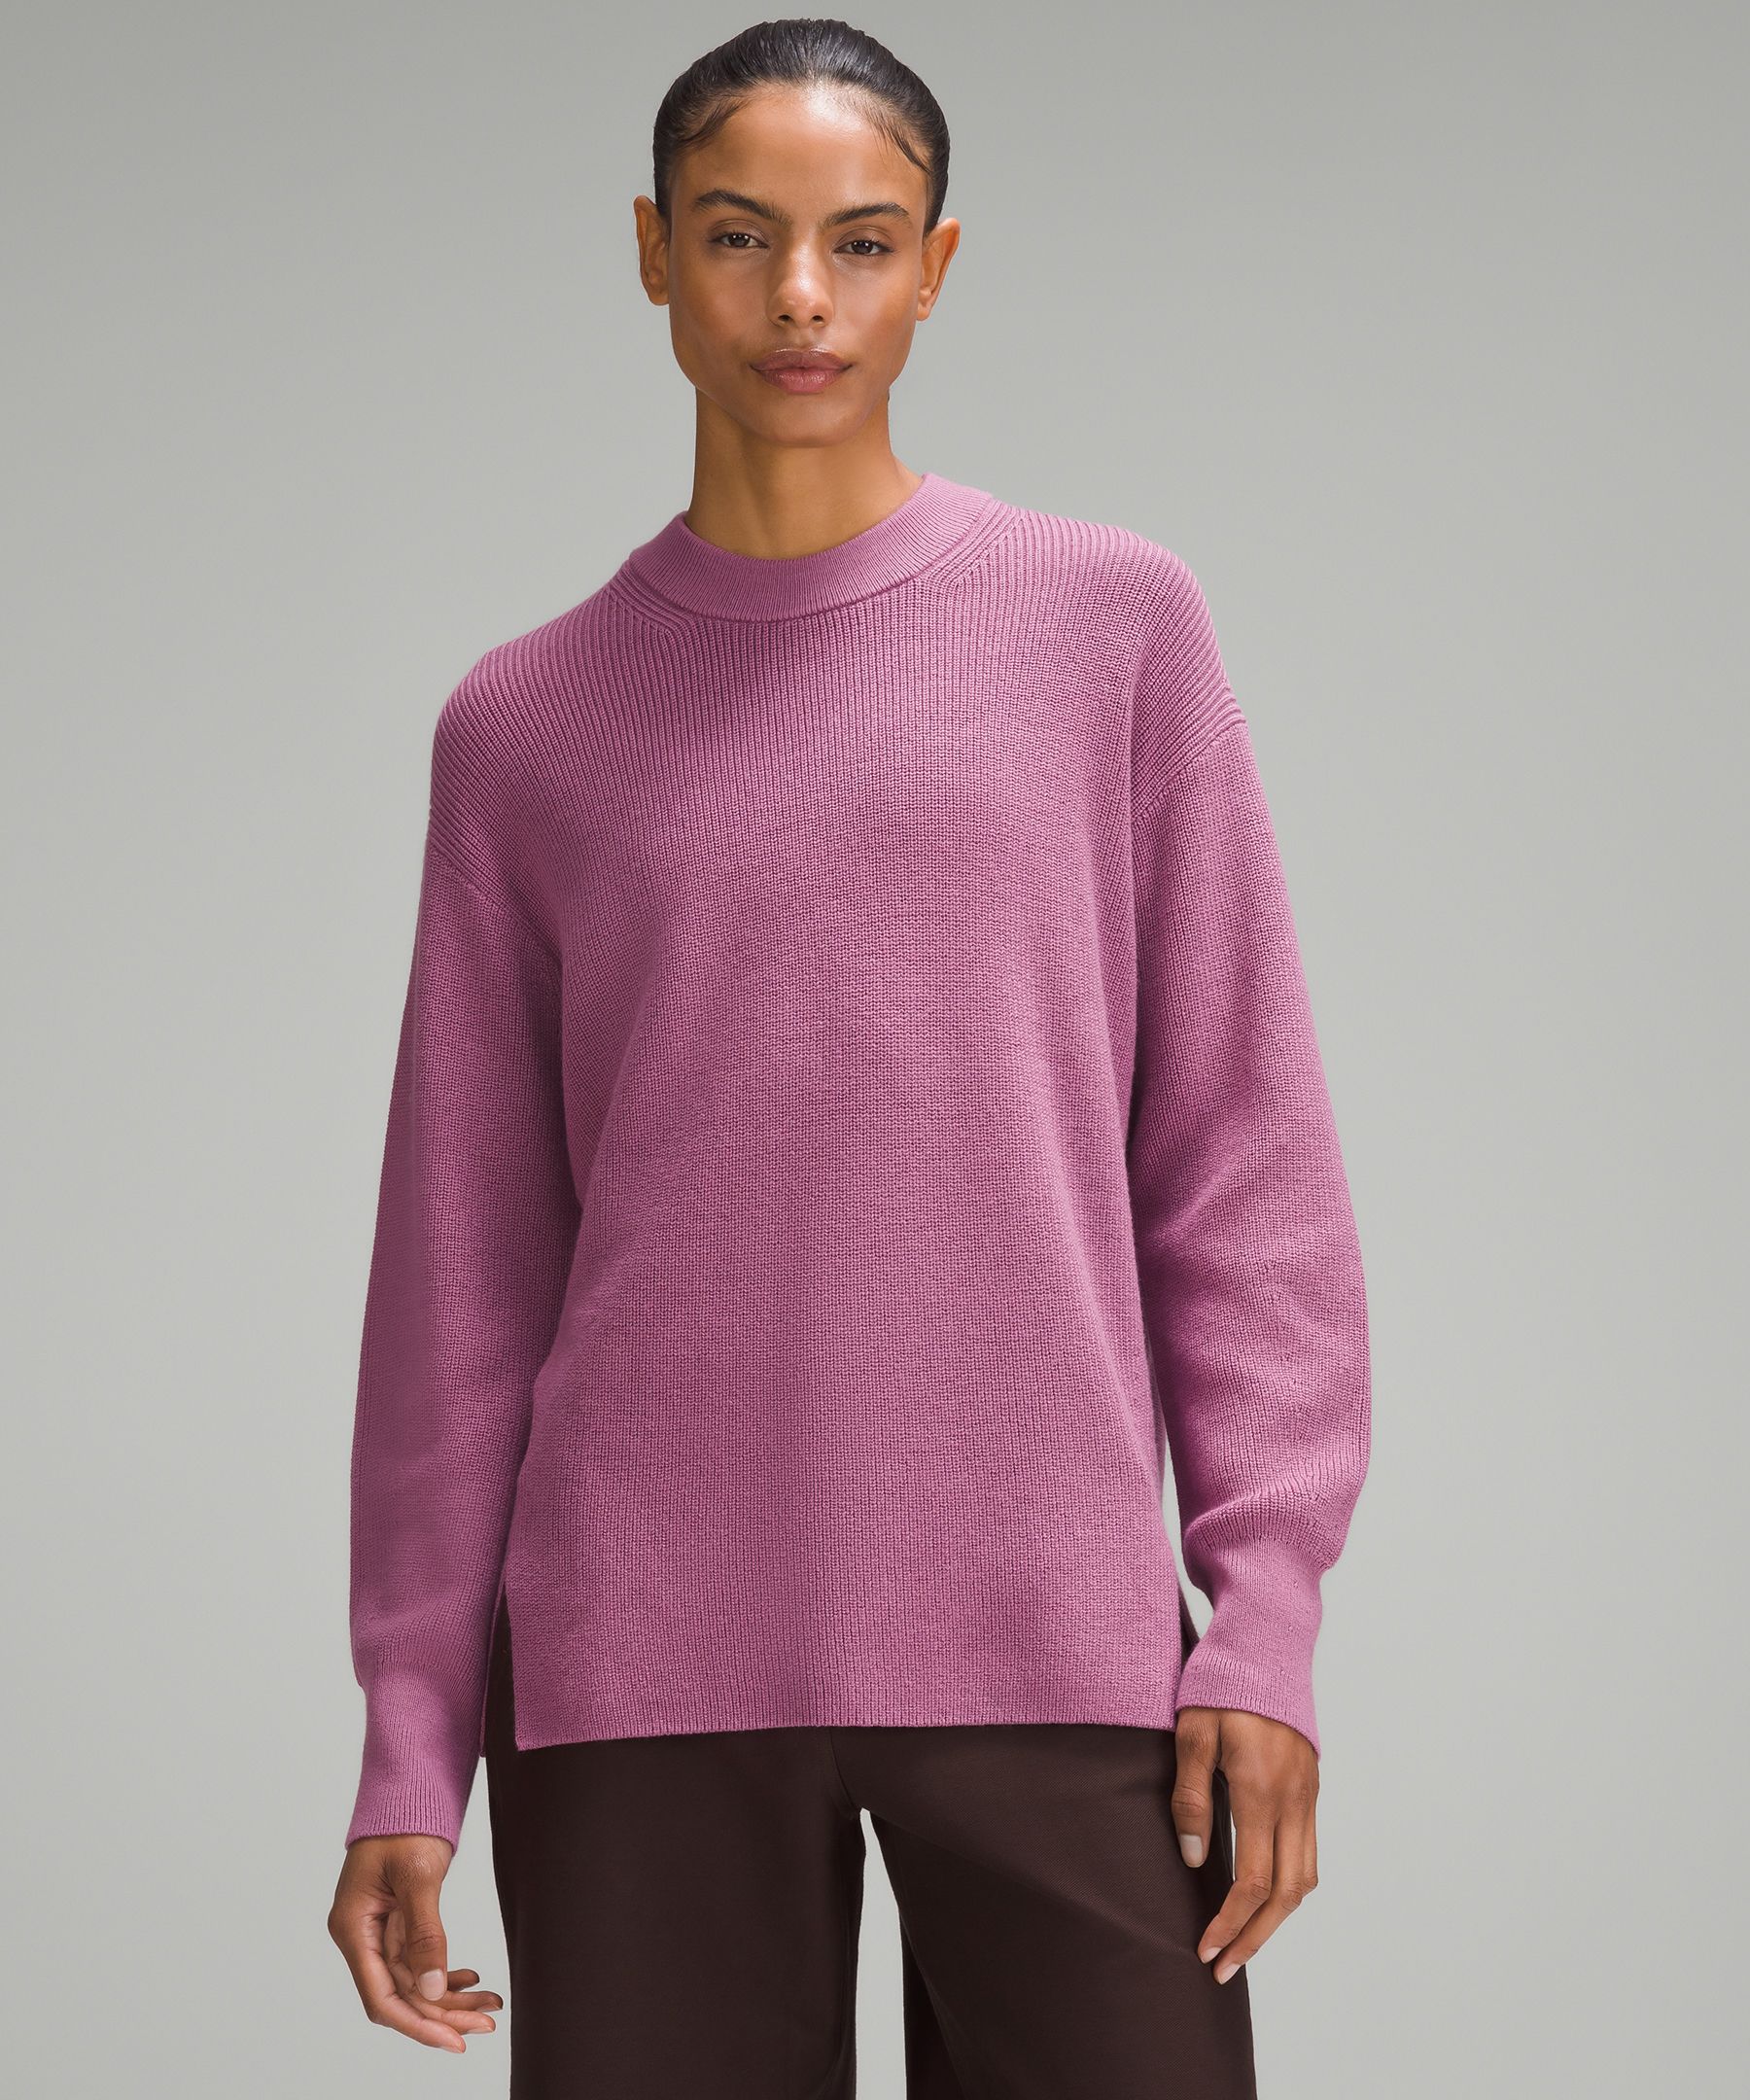 Is this a sweater or sweatshirt?? : r/lululemon